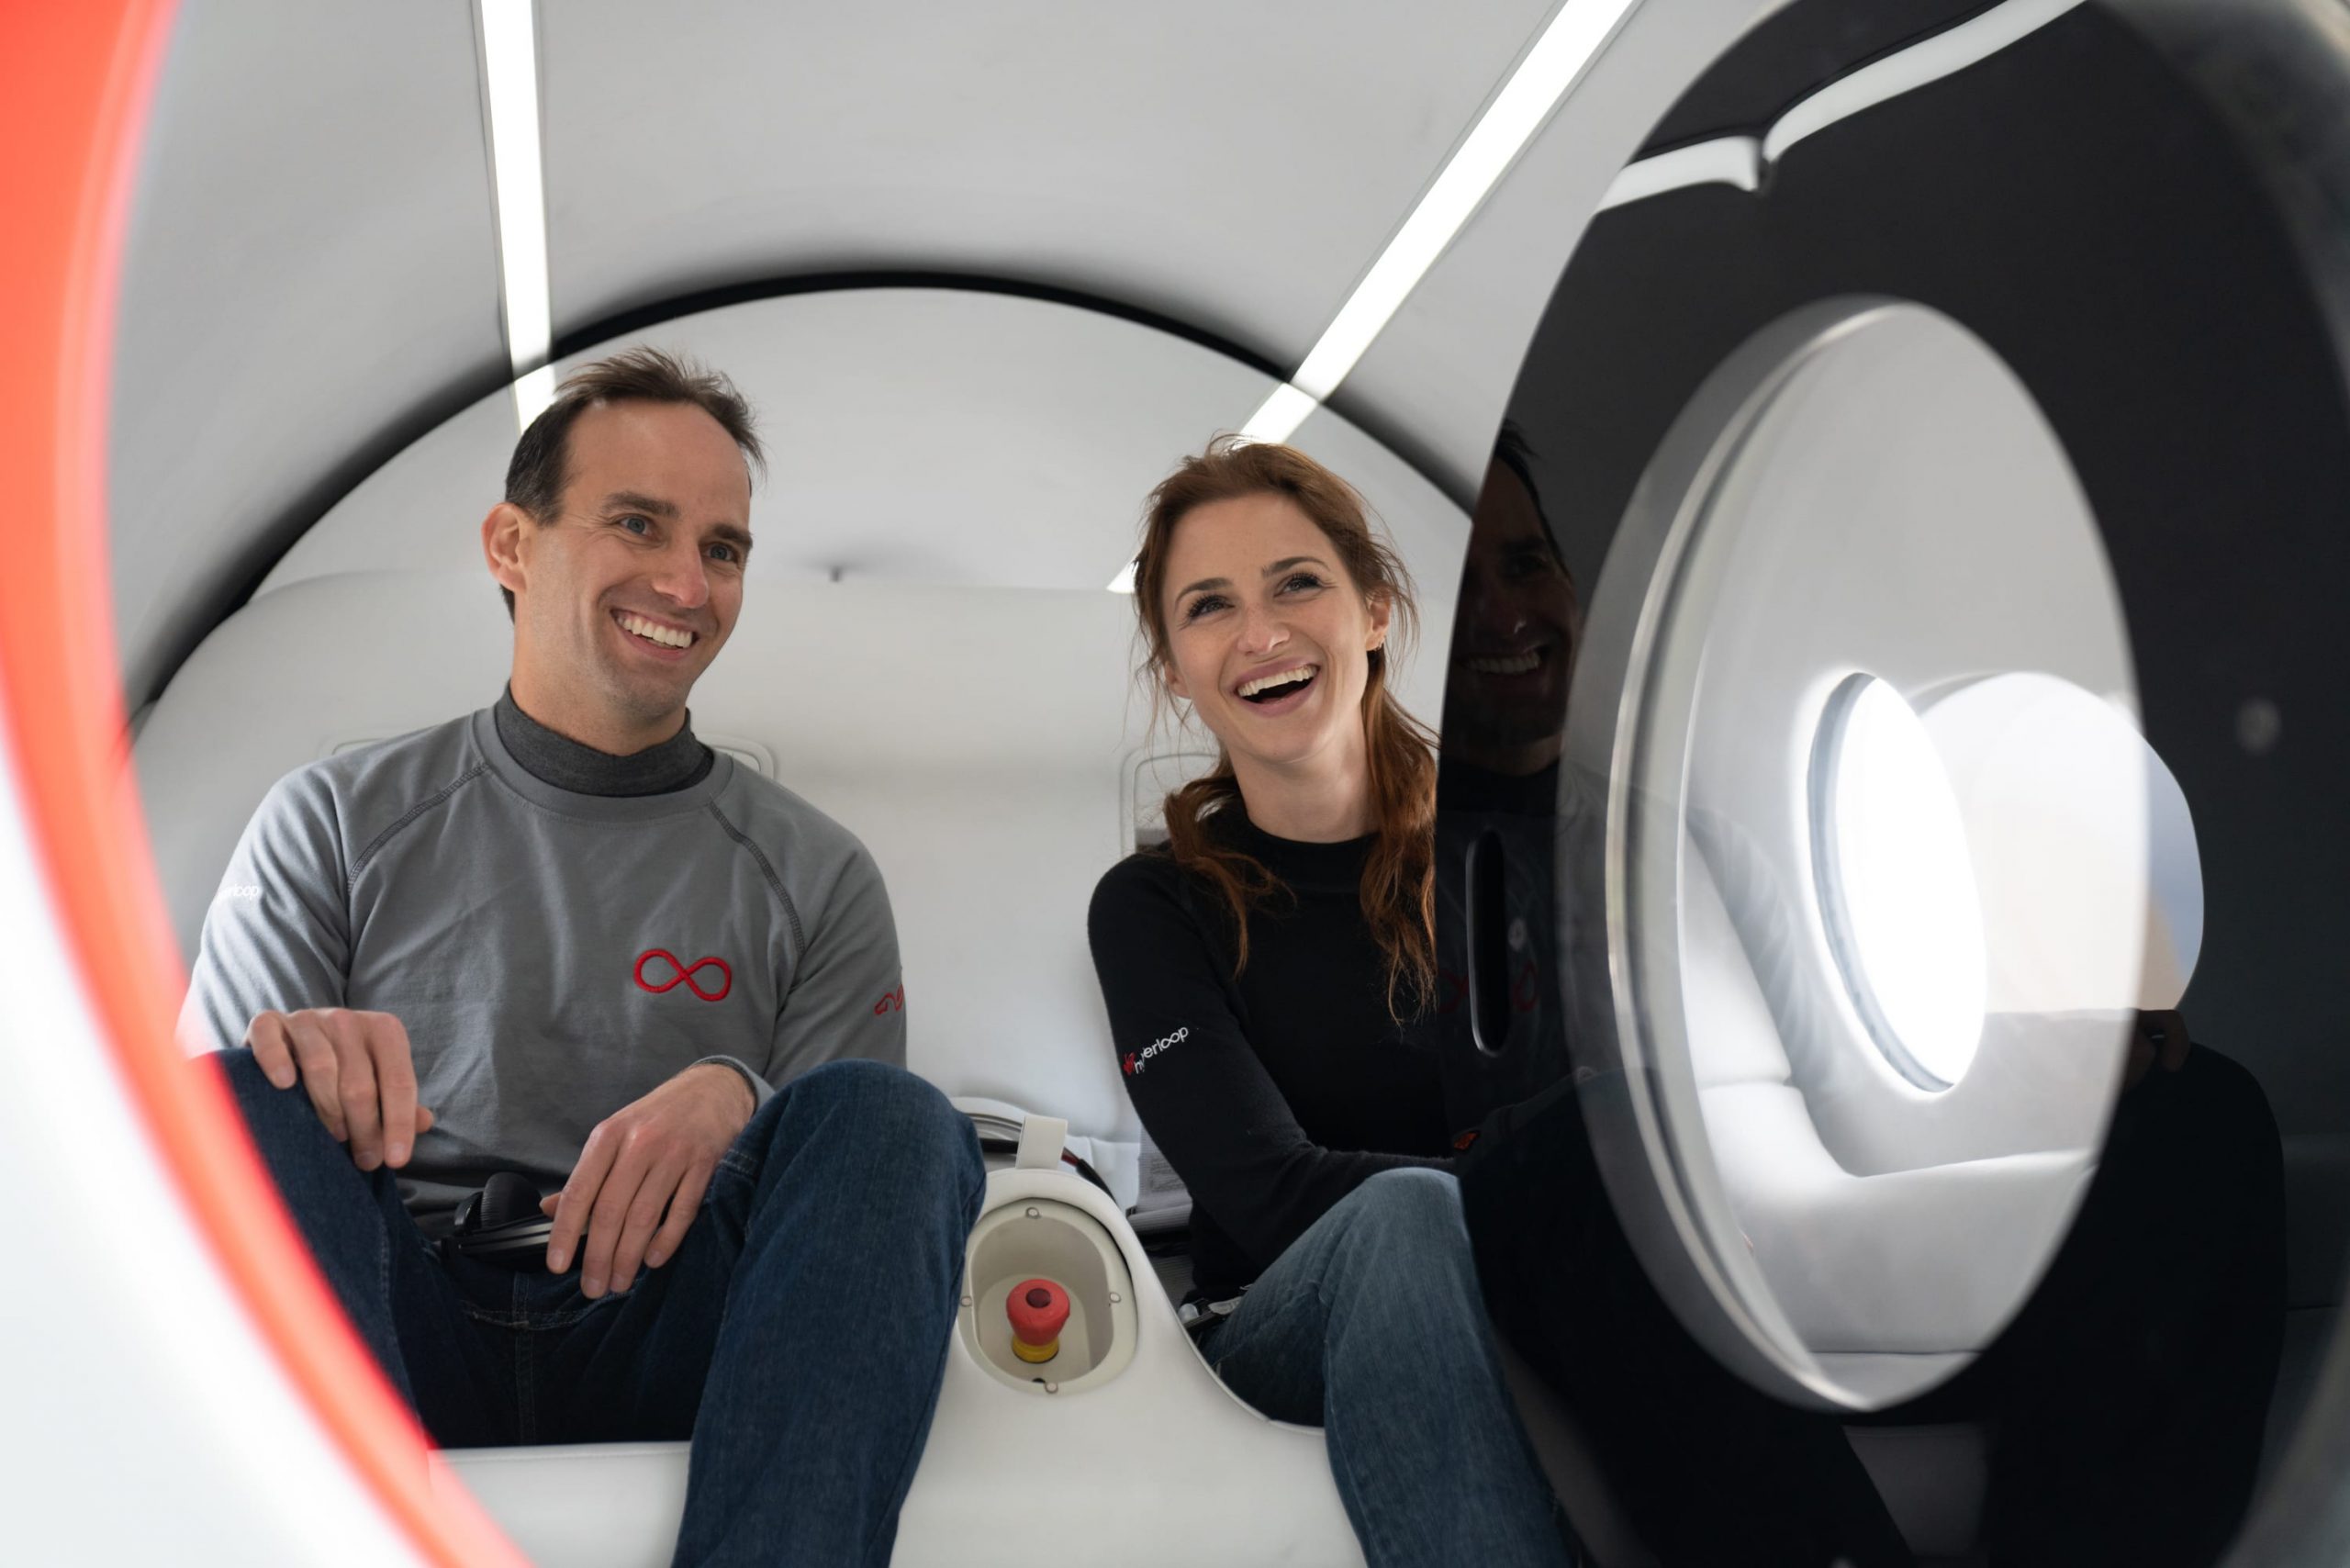 Virgin Hyperloop tests first passenger voyage in Nevada